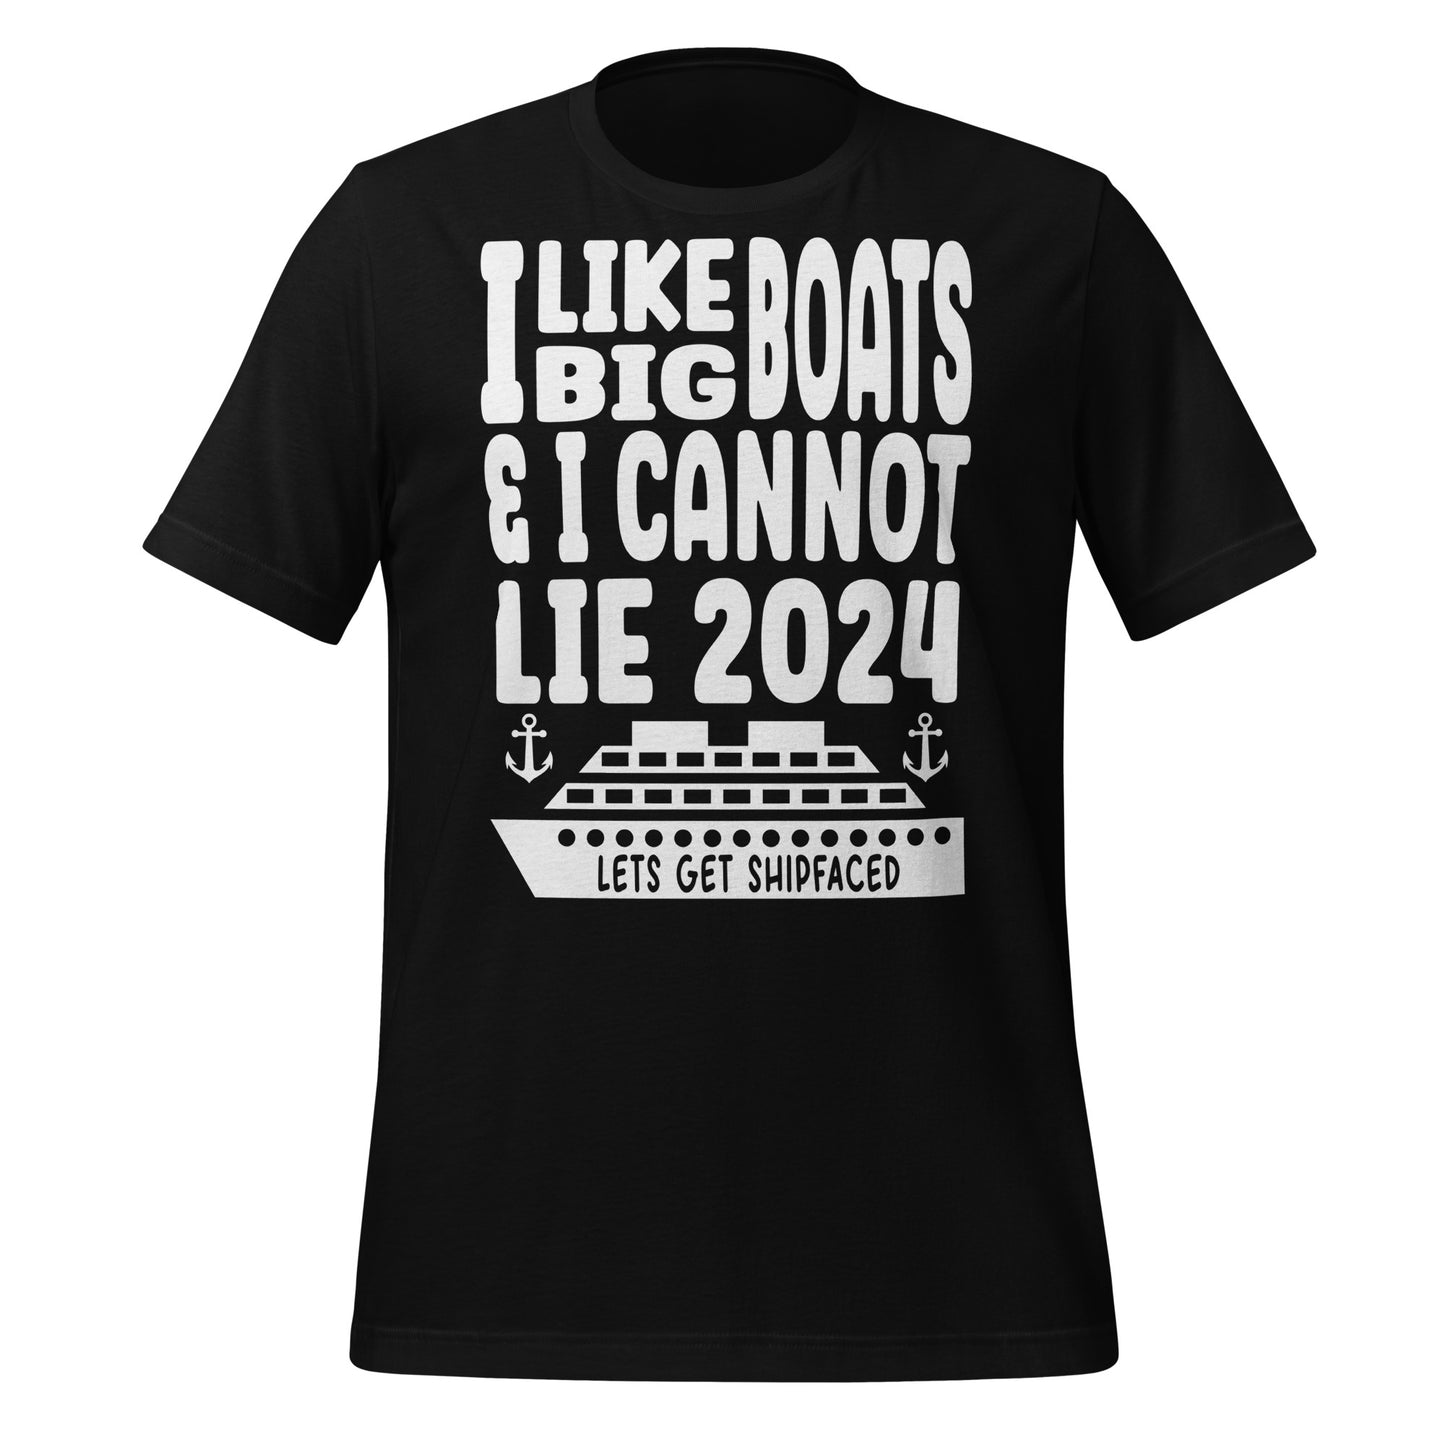 I Like Big Boats & I Cannot Lie 2024 Unisex T-Shirt - Lets Get Shipfaced Designed by Dog Artistry